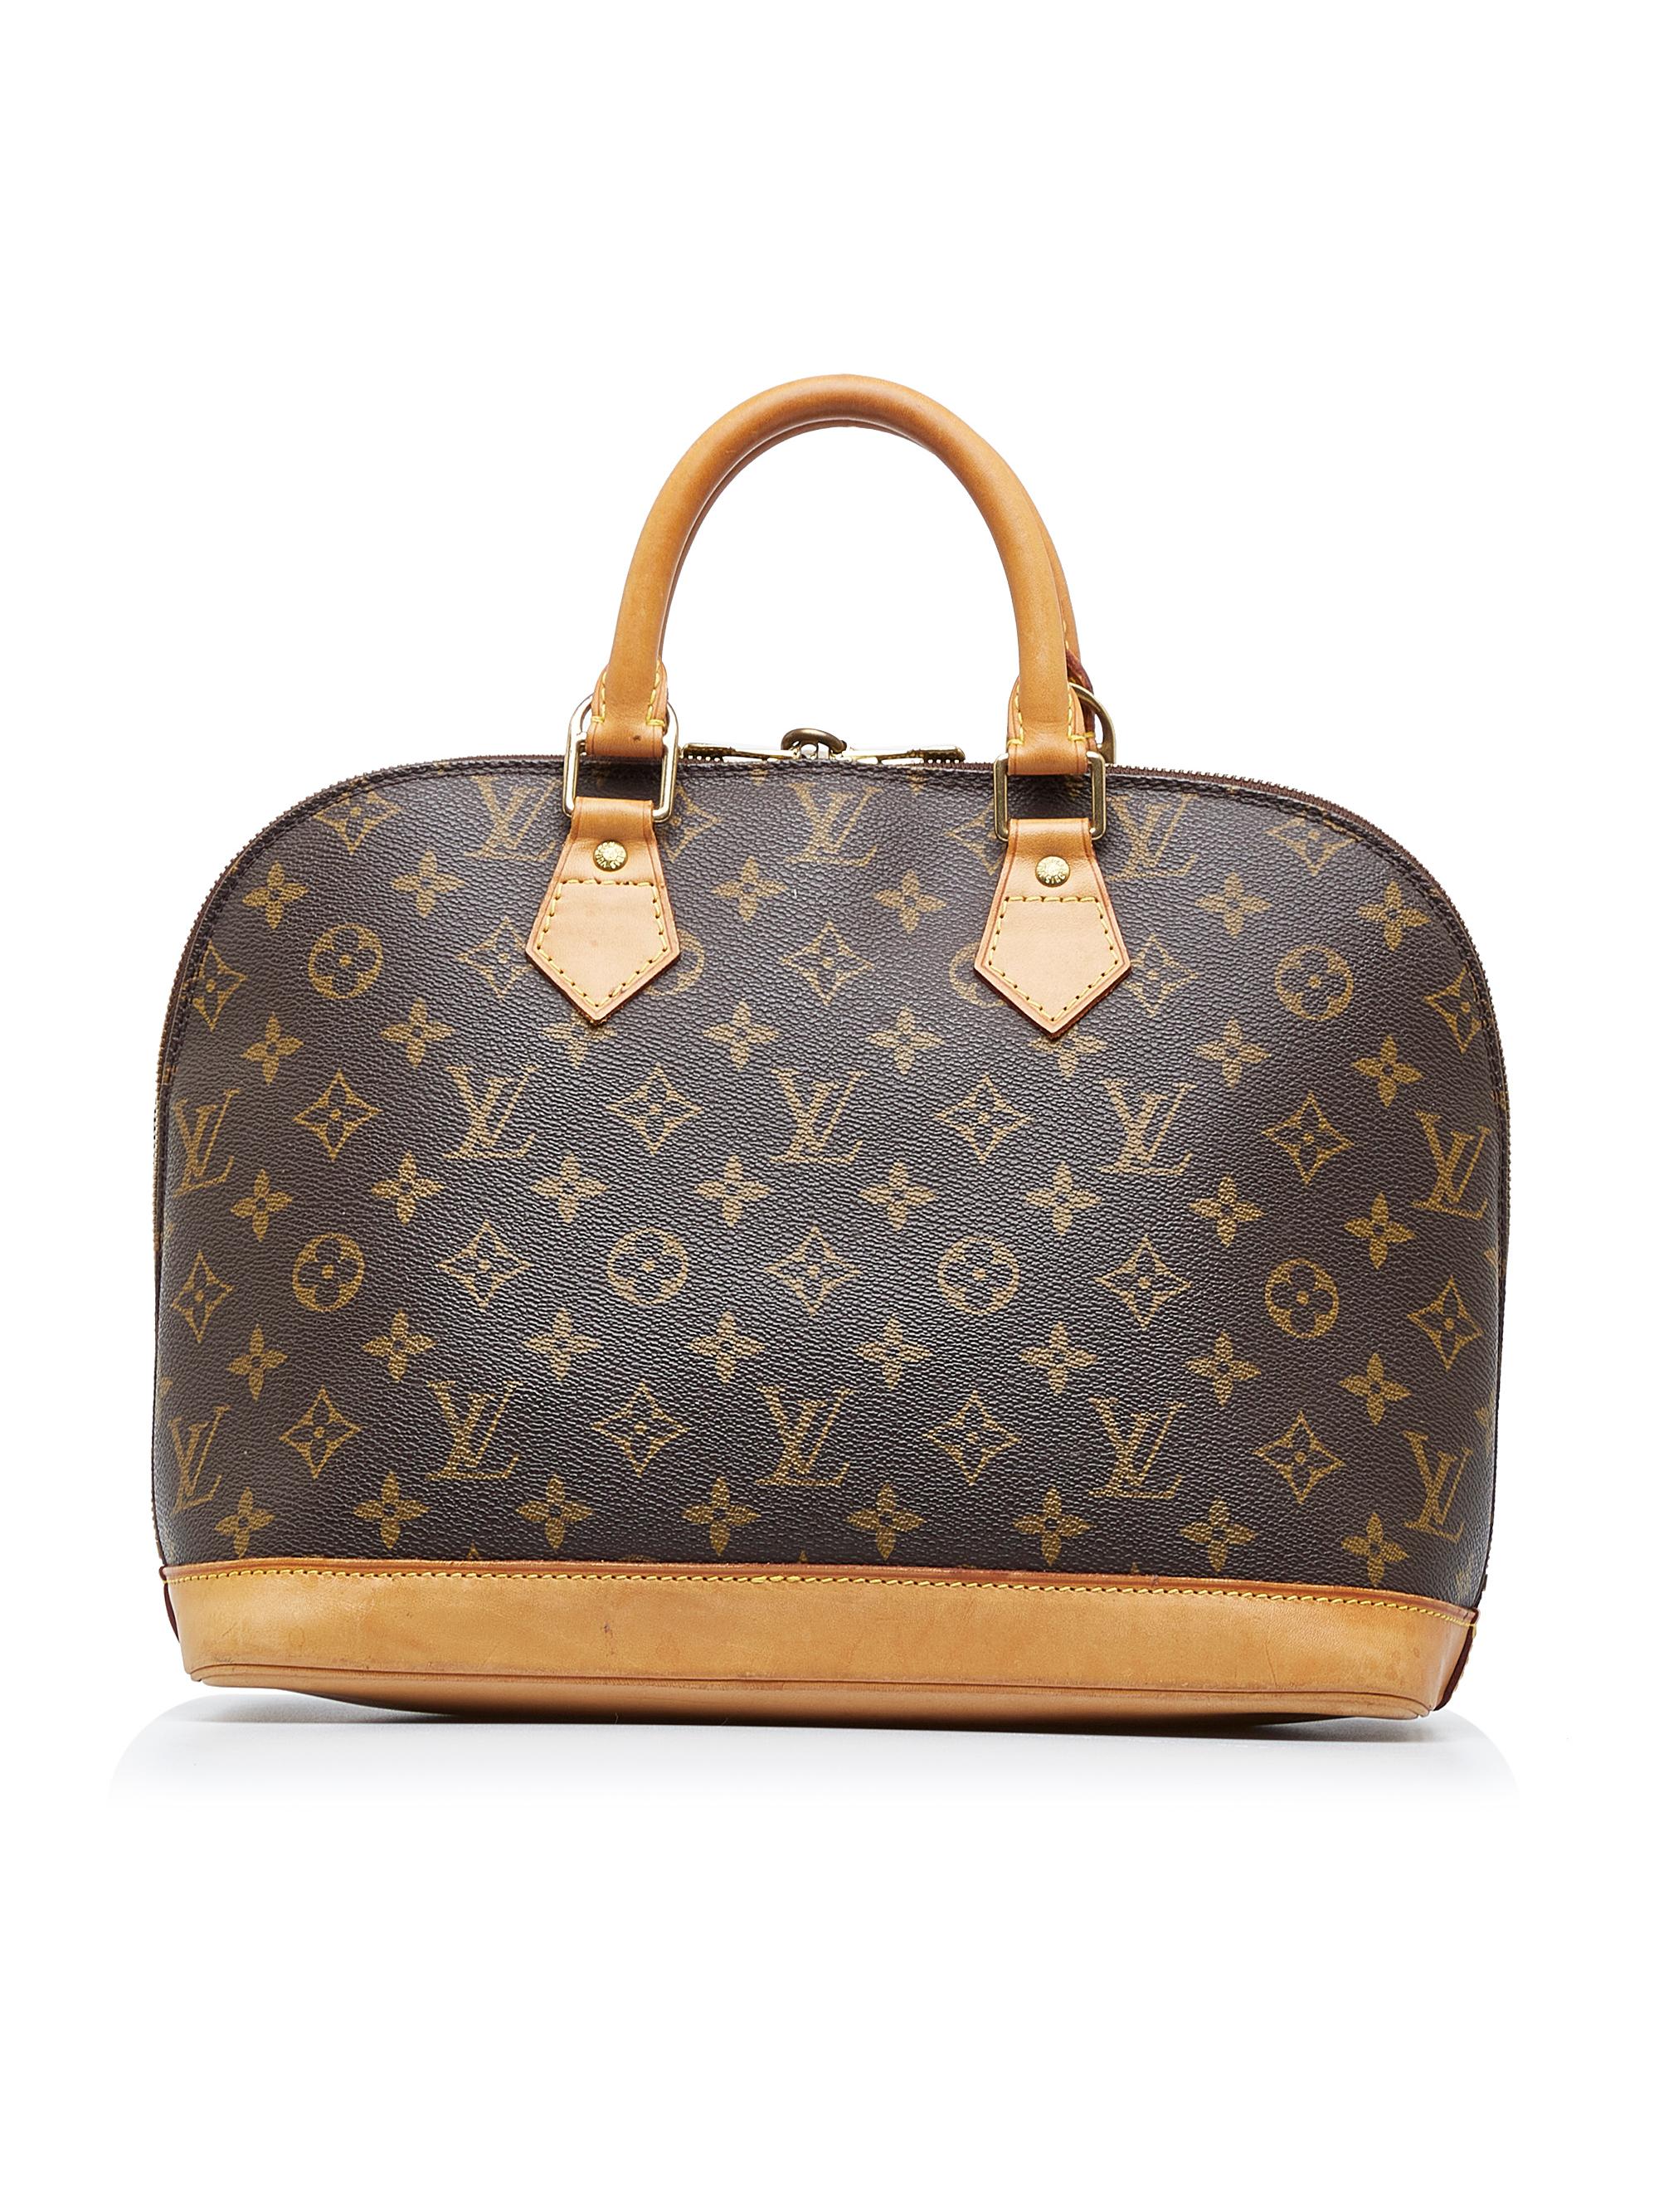 Louis Vuitton Monogram Ellipse Bag $599.99